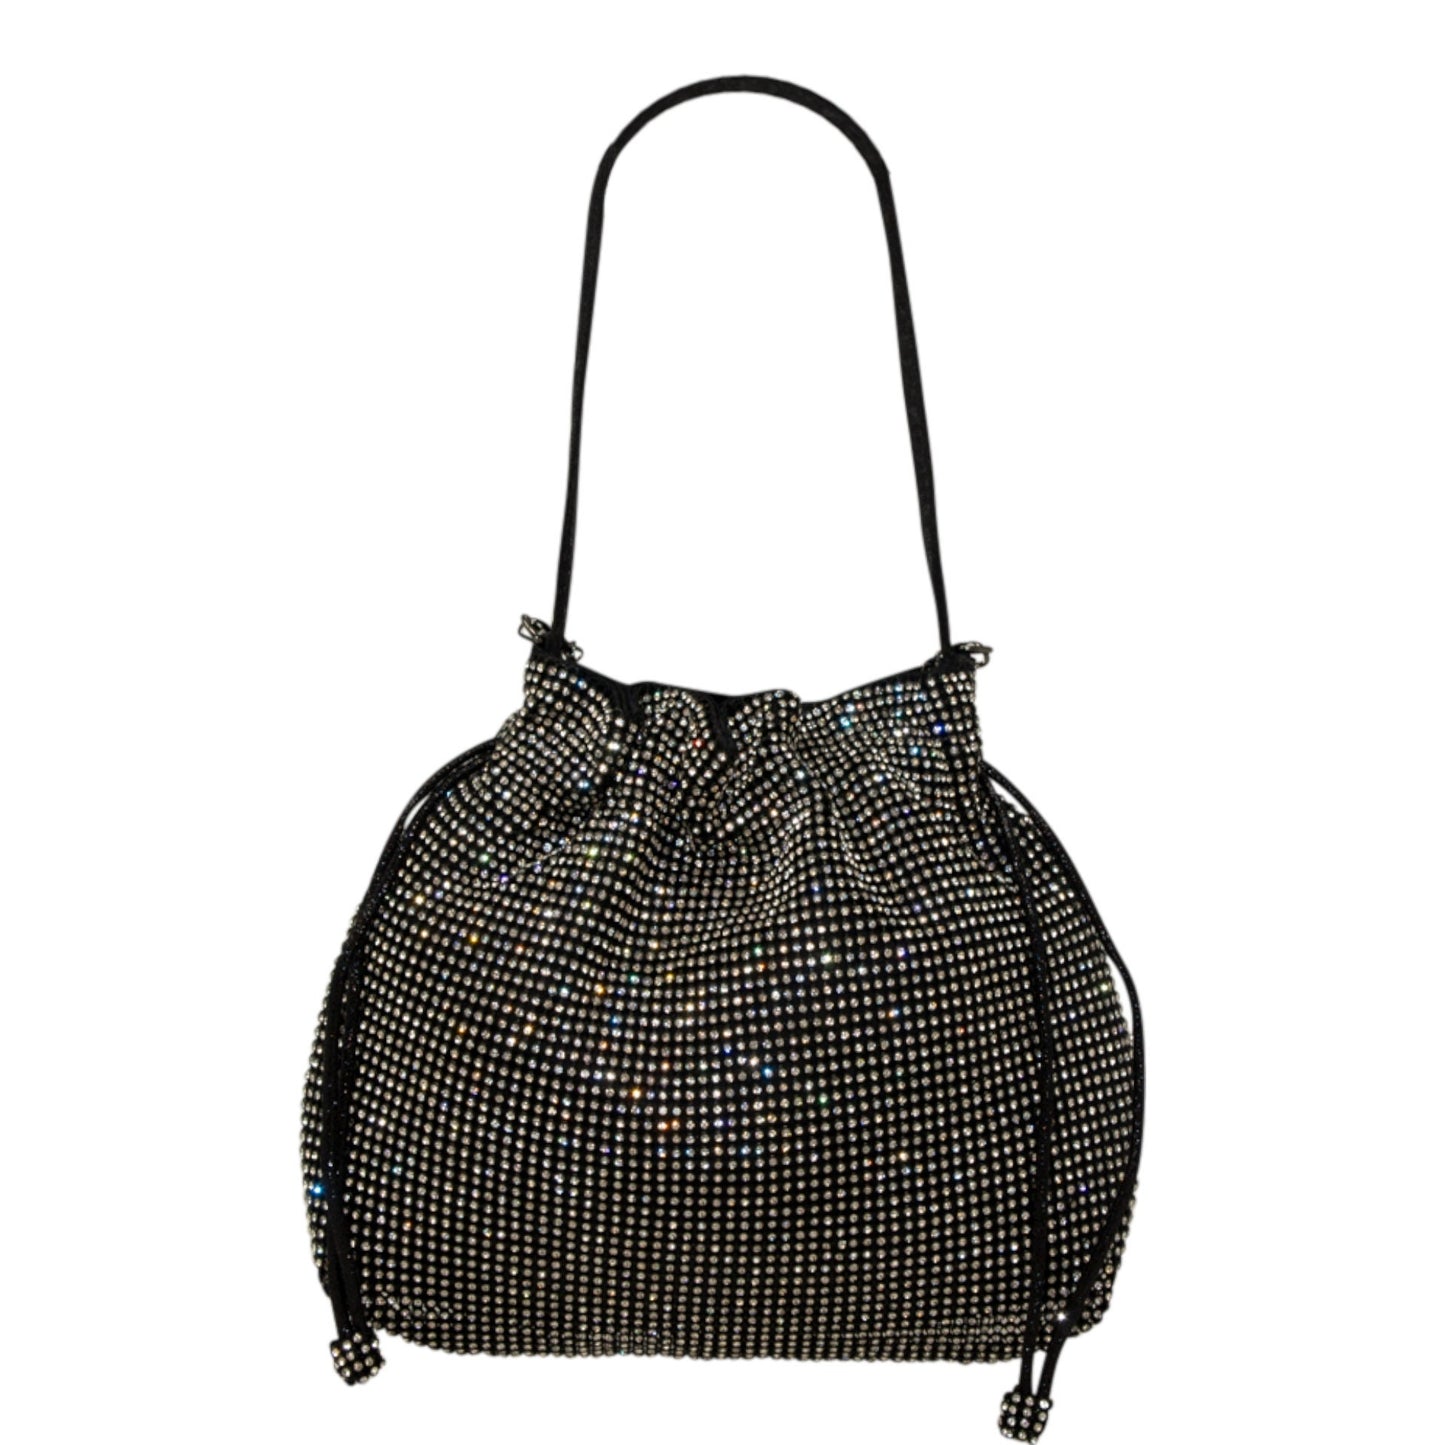 Sparkly Black Draw String Shoulder Bag perfect eye-catching  Black handbag Gift Present Wedding Party